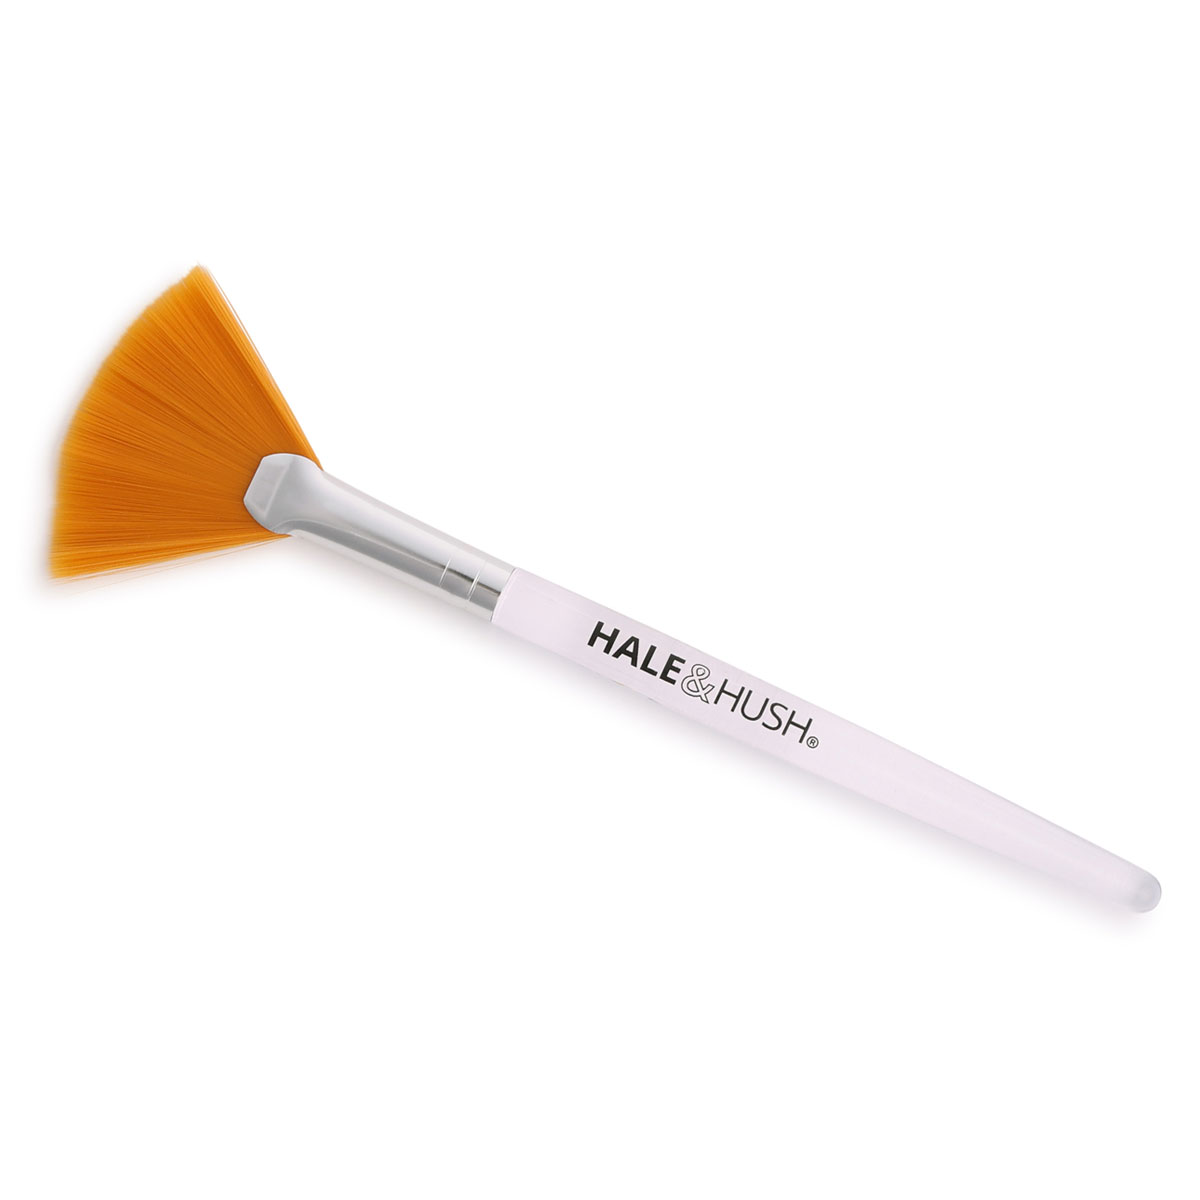 Fan Brush with Hale & Hush logo